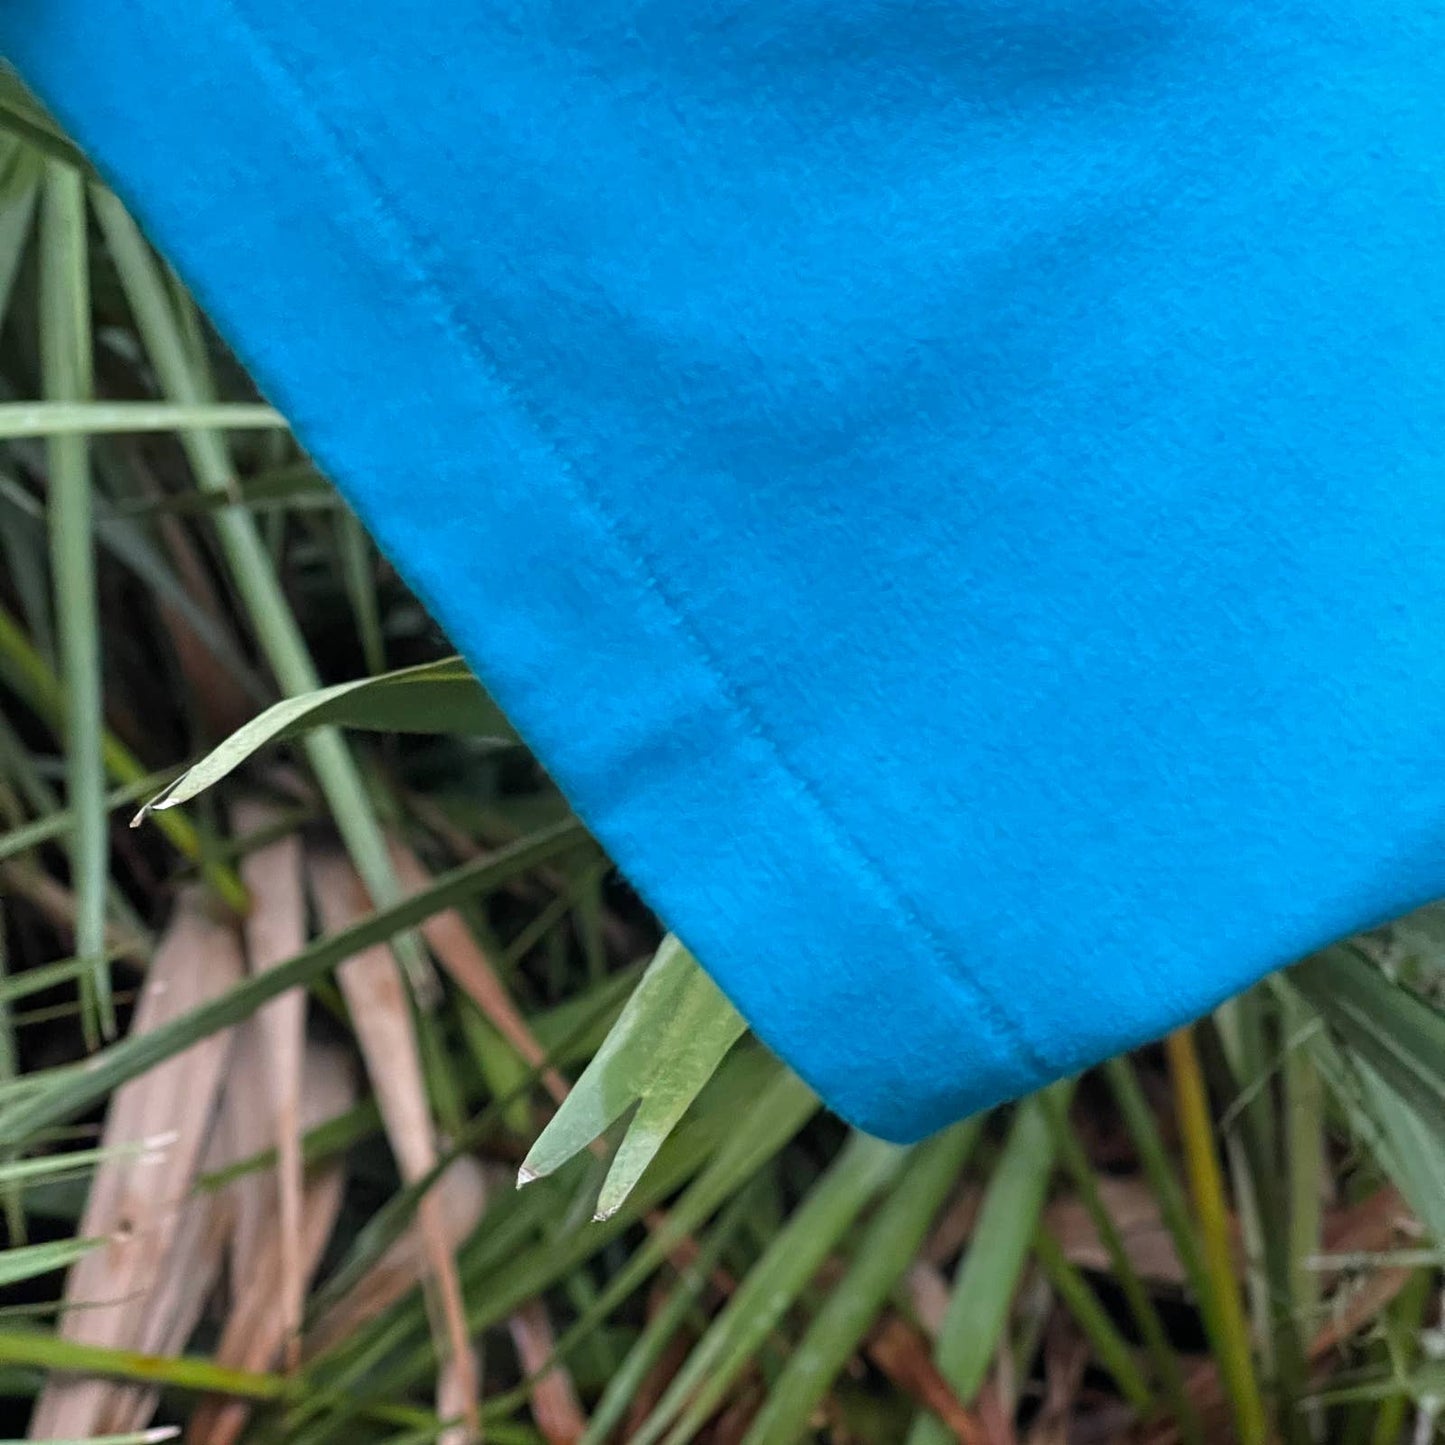 Vintage 90s Frog Bikini Tee Shirt Blue Crescent Lake Short Sleeve Hanes Size L